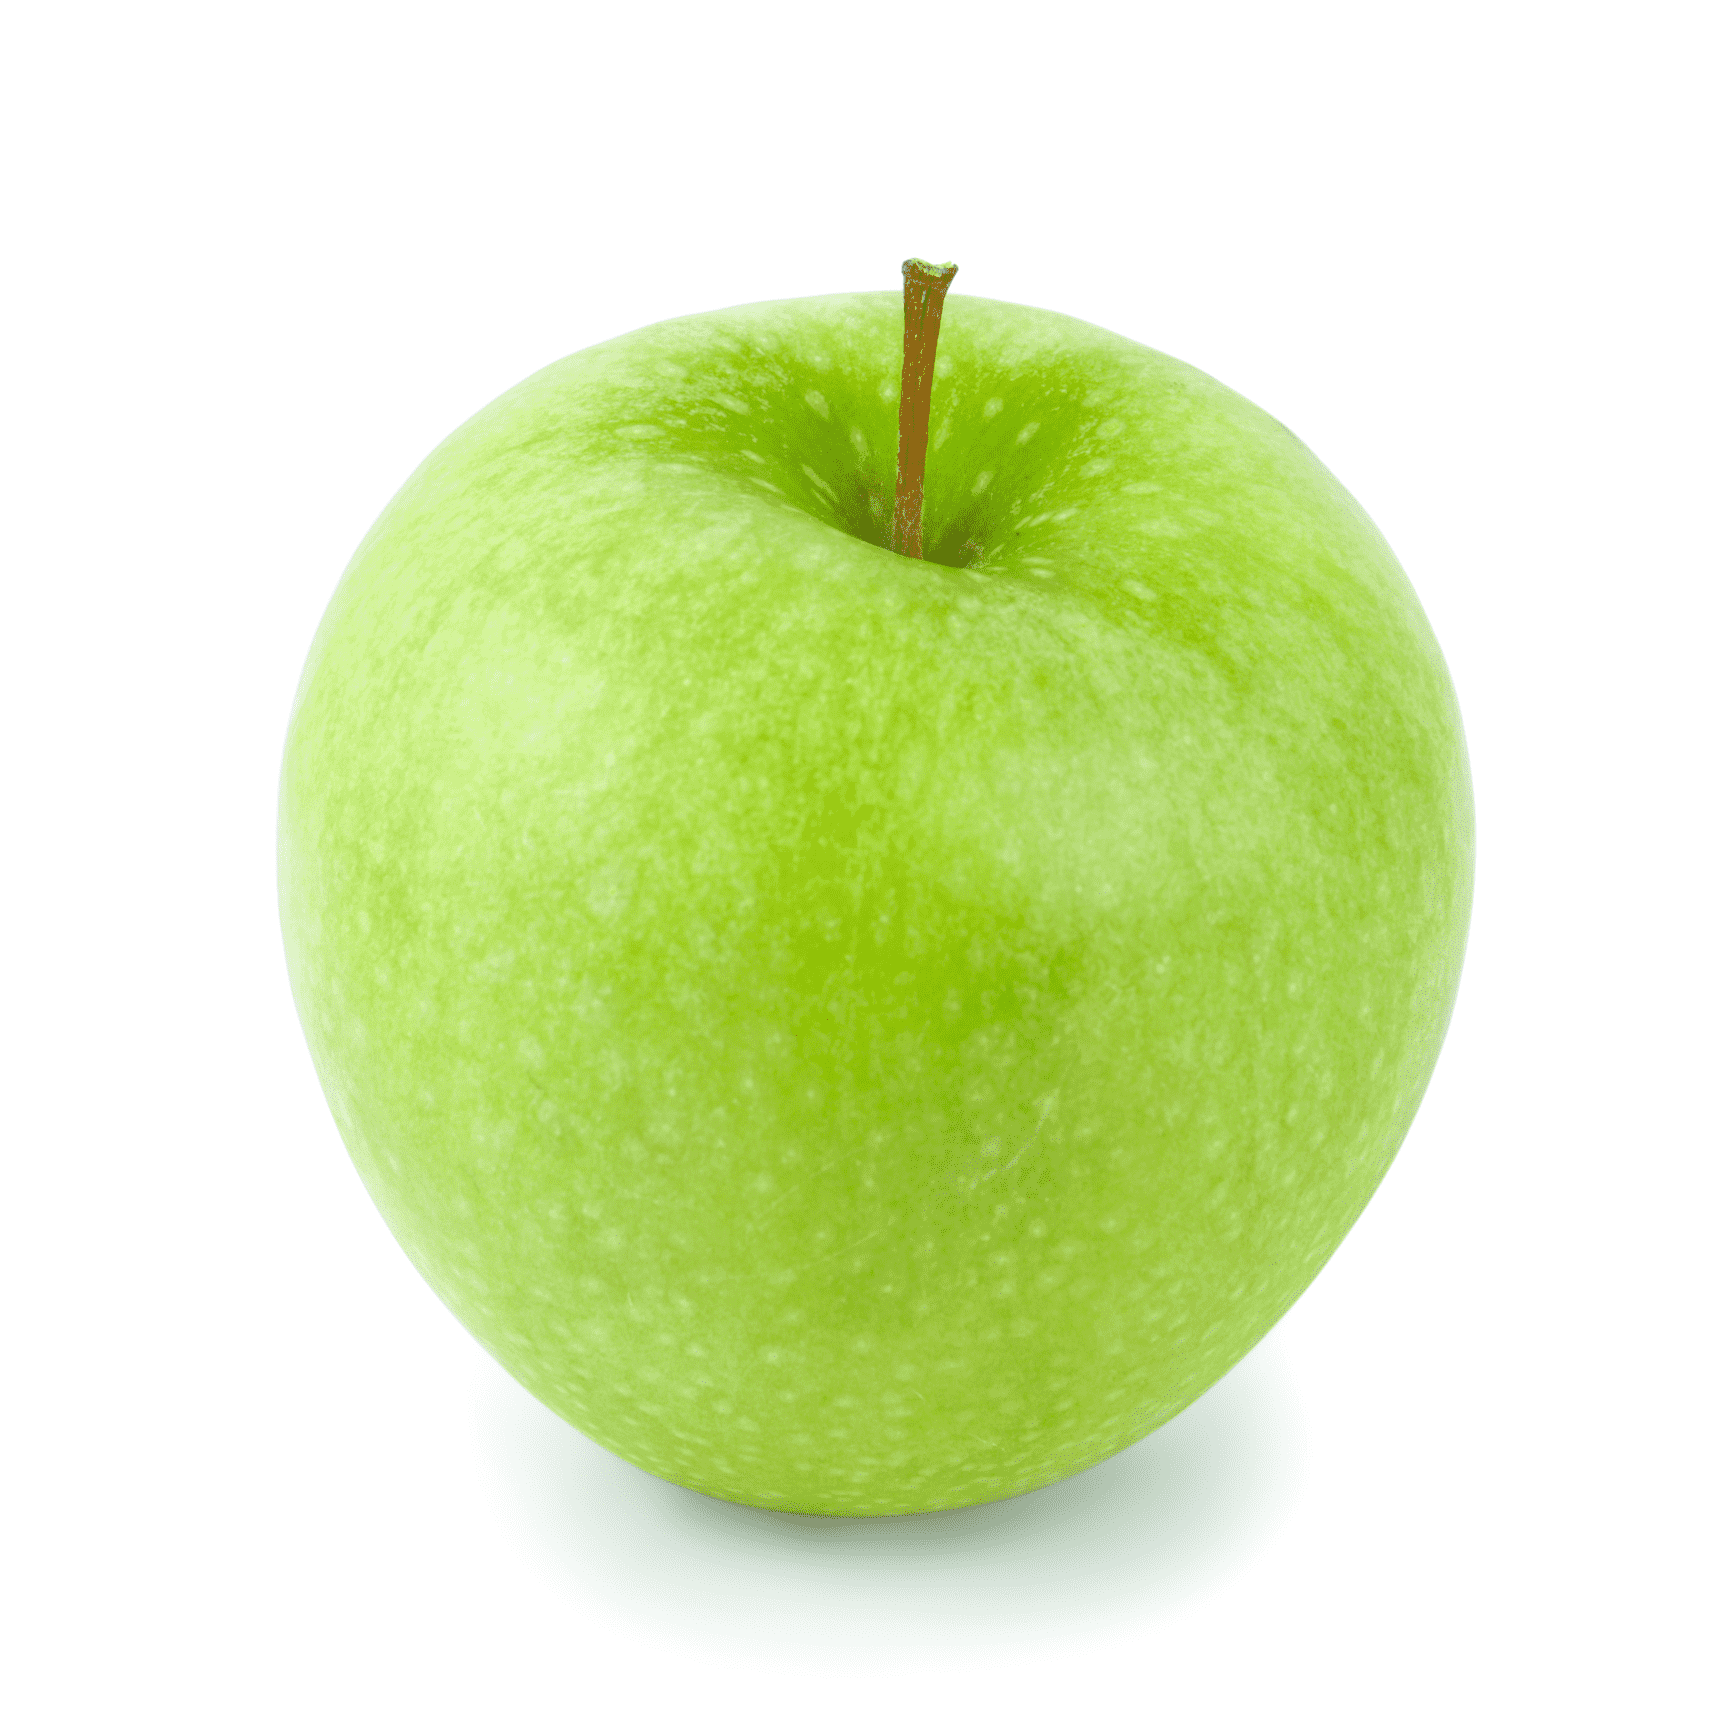 Äpple Granny Smith ca180-190g/st, pris beräknad per styck